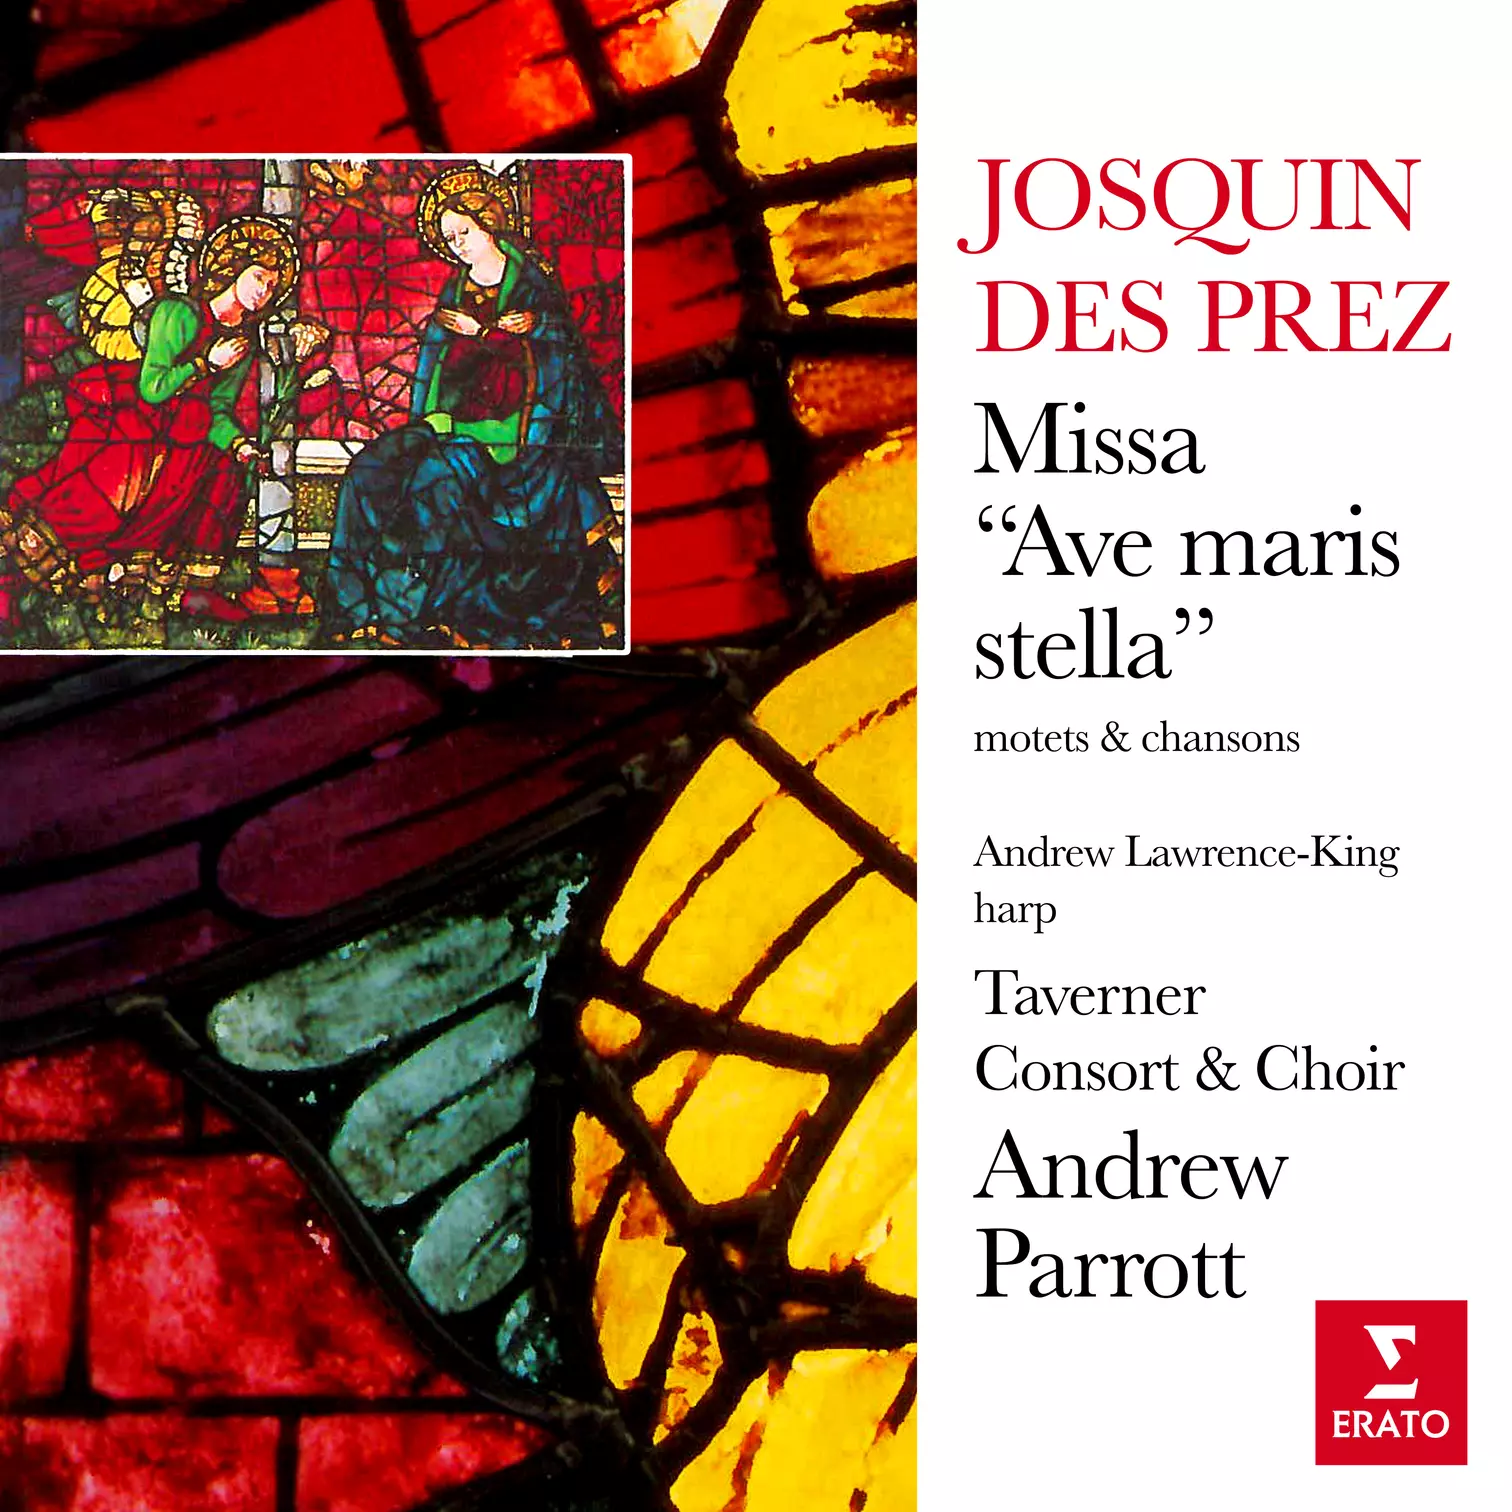 Josquin Des Prez: Missa “Ave maris stella”, motets & chansons